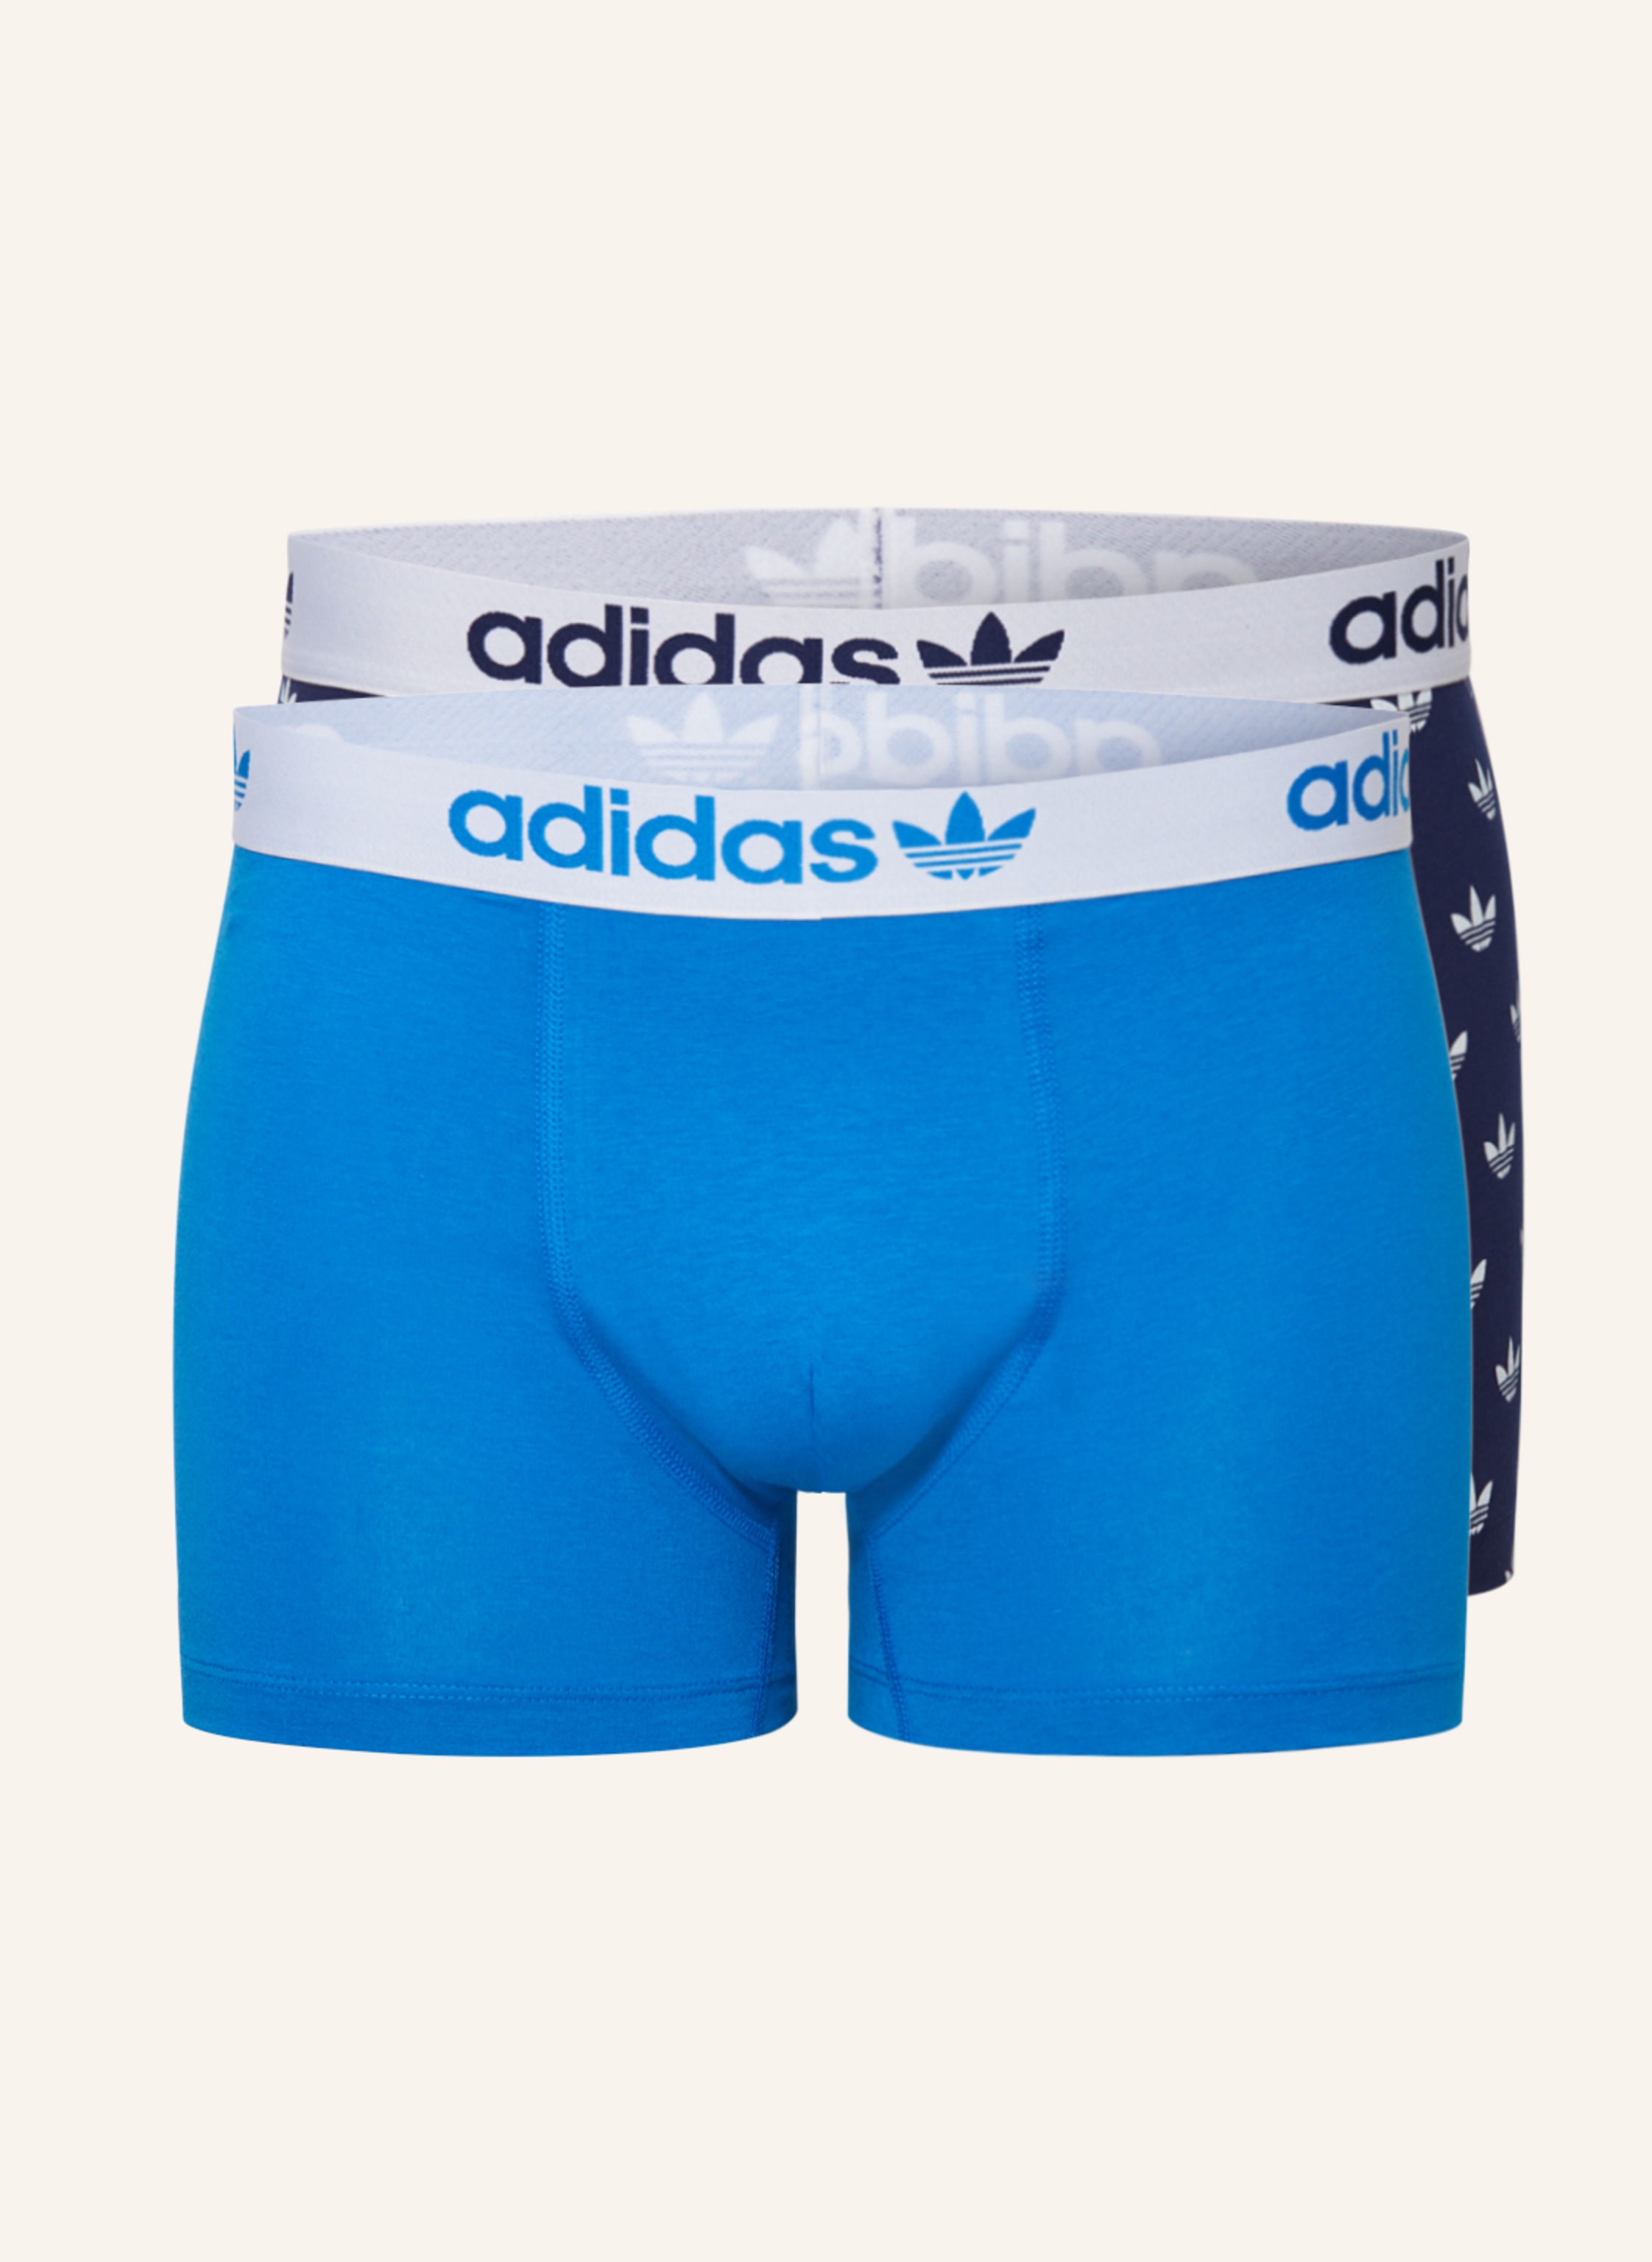 adidas Originals 2er-Pack Boxershorts in weiss blau/ dunkelblau